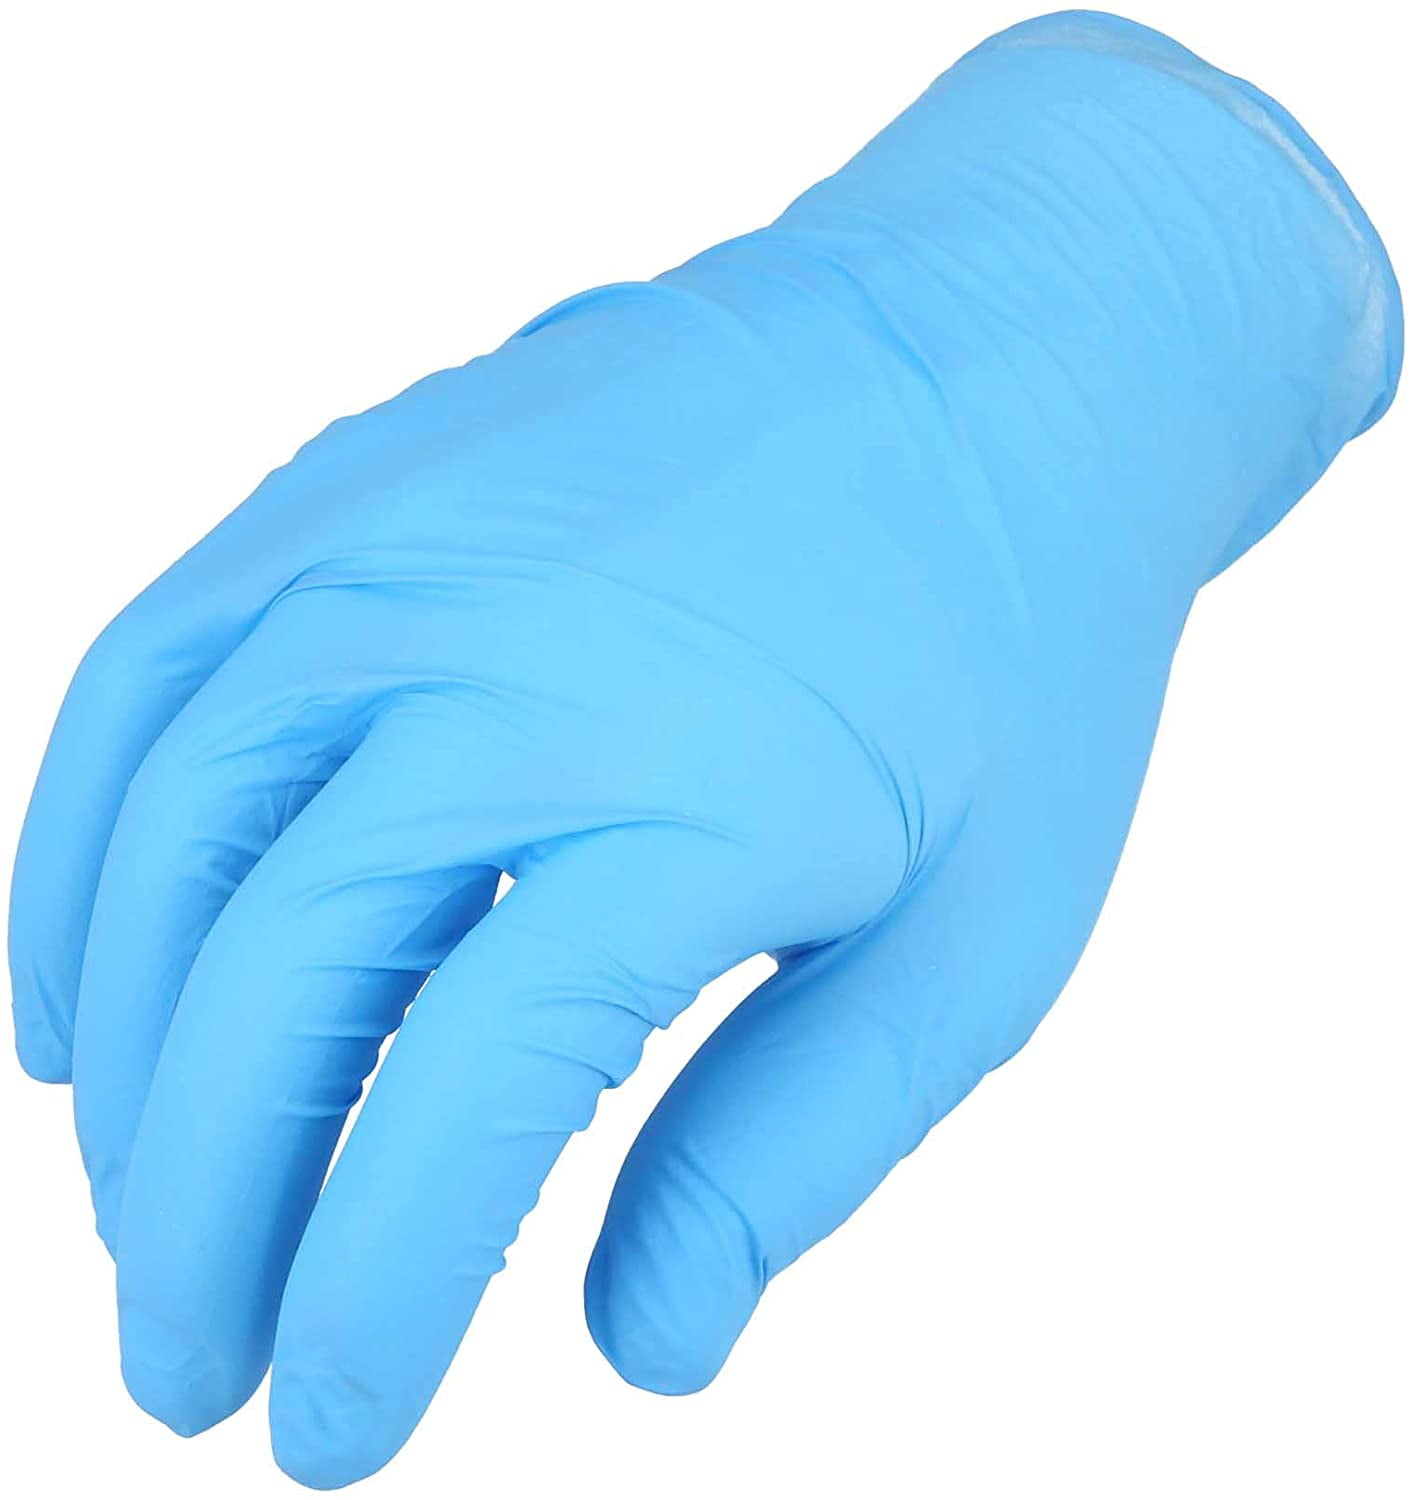 100 Disposable Gloves Clear Blue Black Vinyl Nitrile Latex Glove Powder Free 